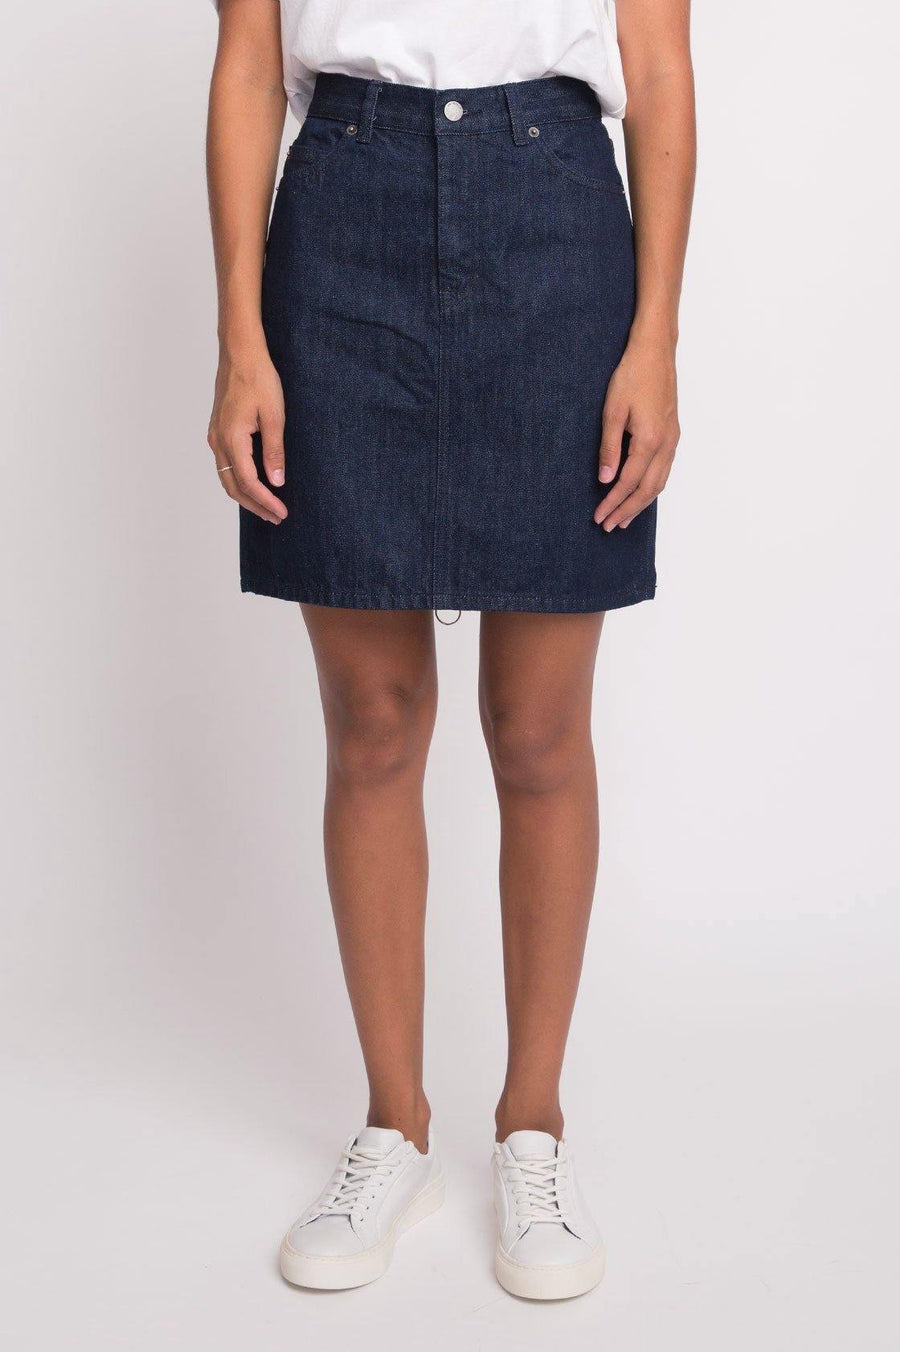 Bix Denim Skirt - Rinsed Blue - Dr Denim Jeans - Australia & NZ